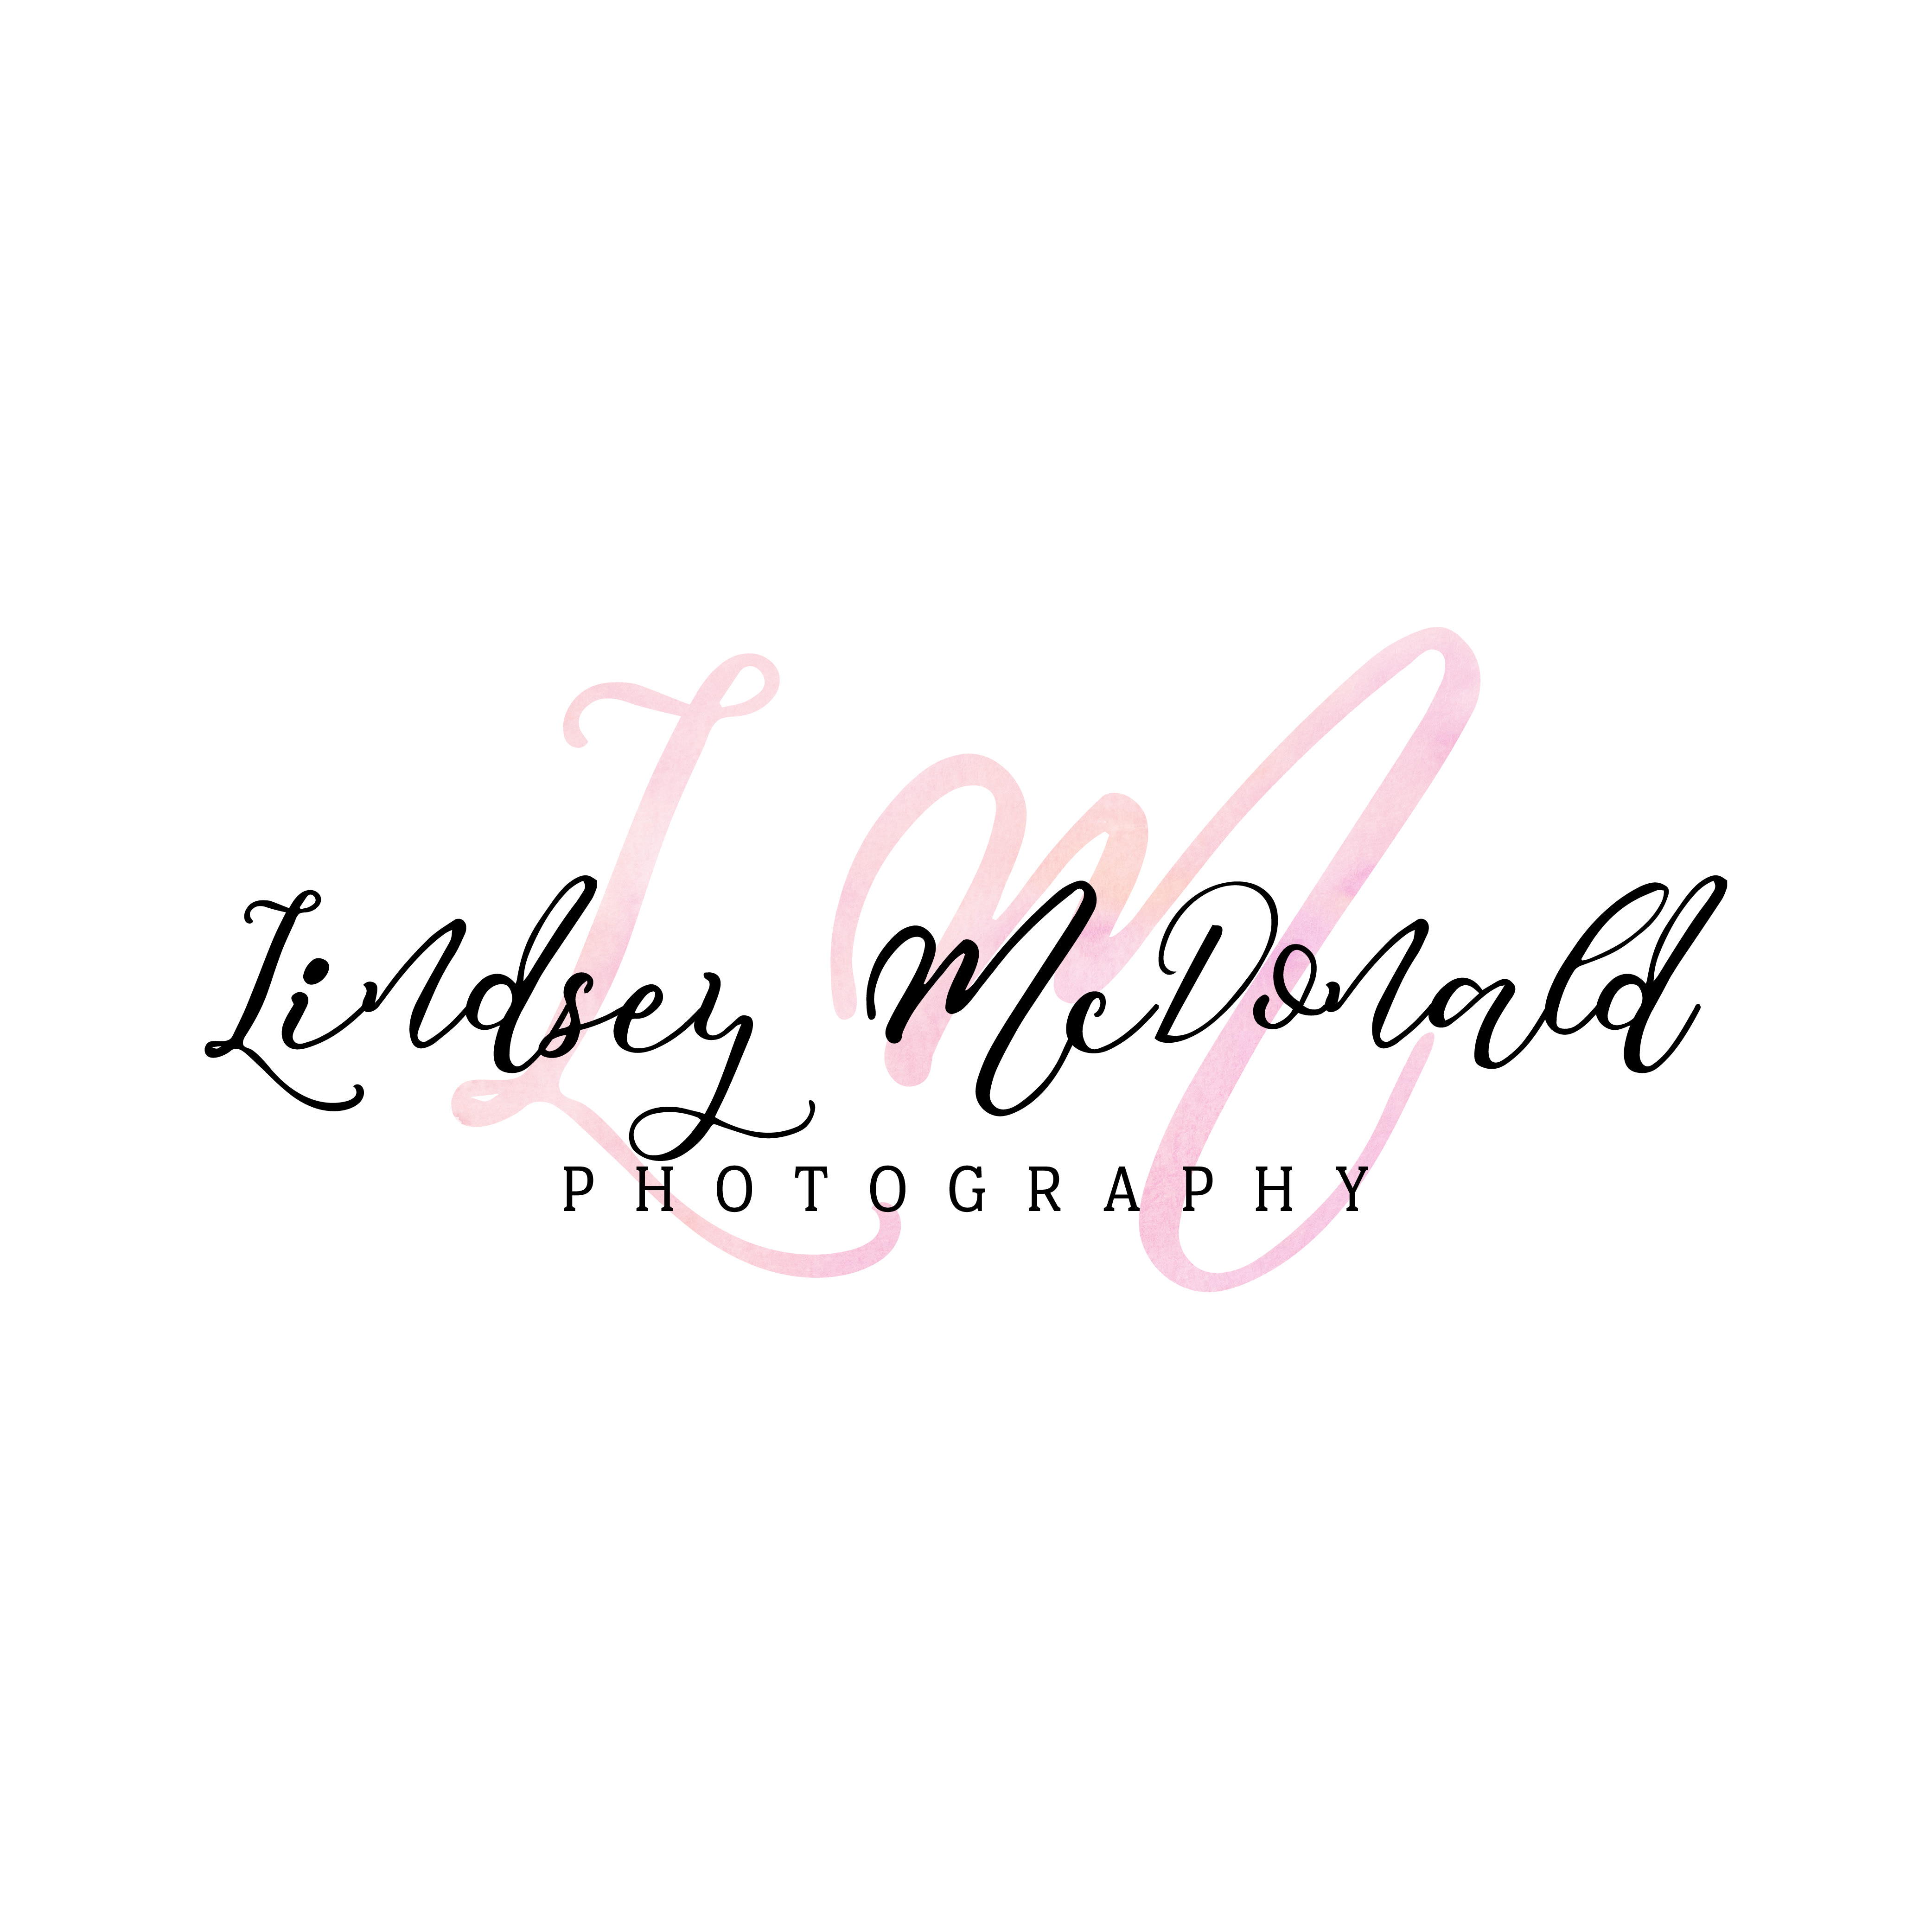 Lindsey McDonald Photography